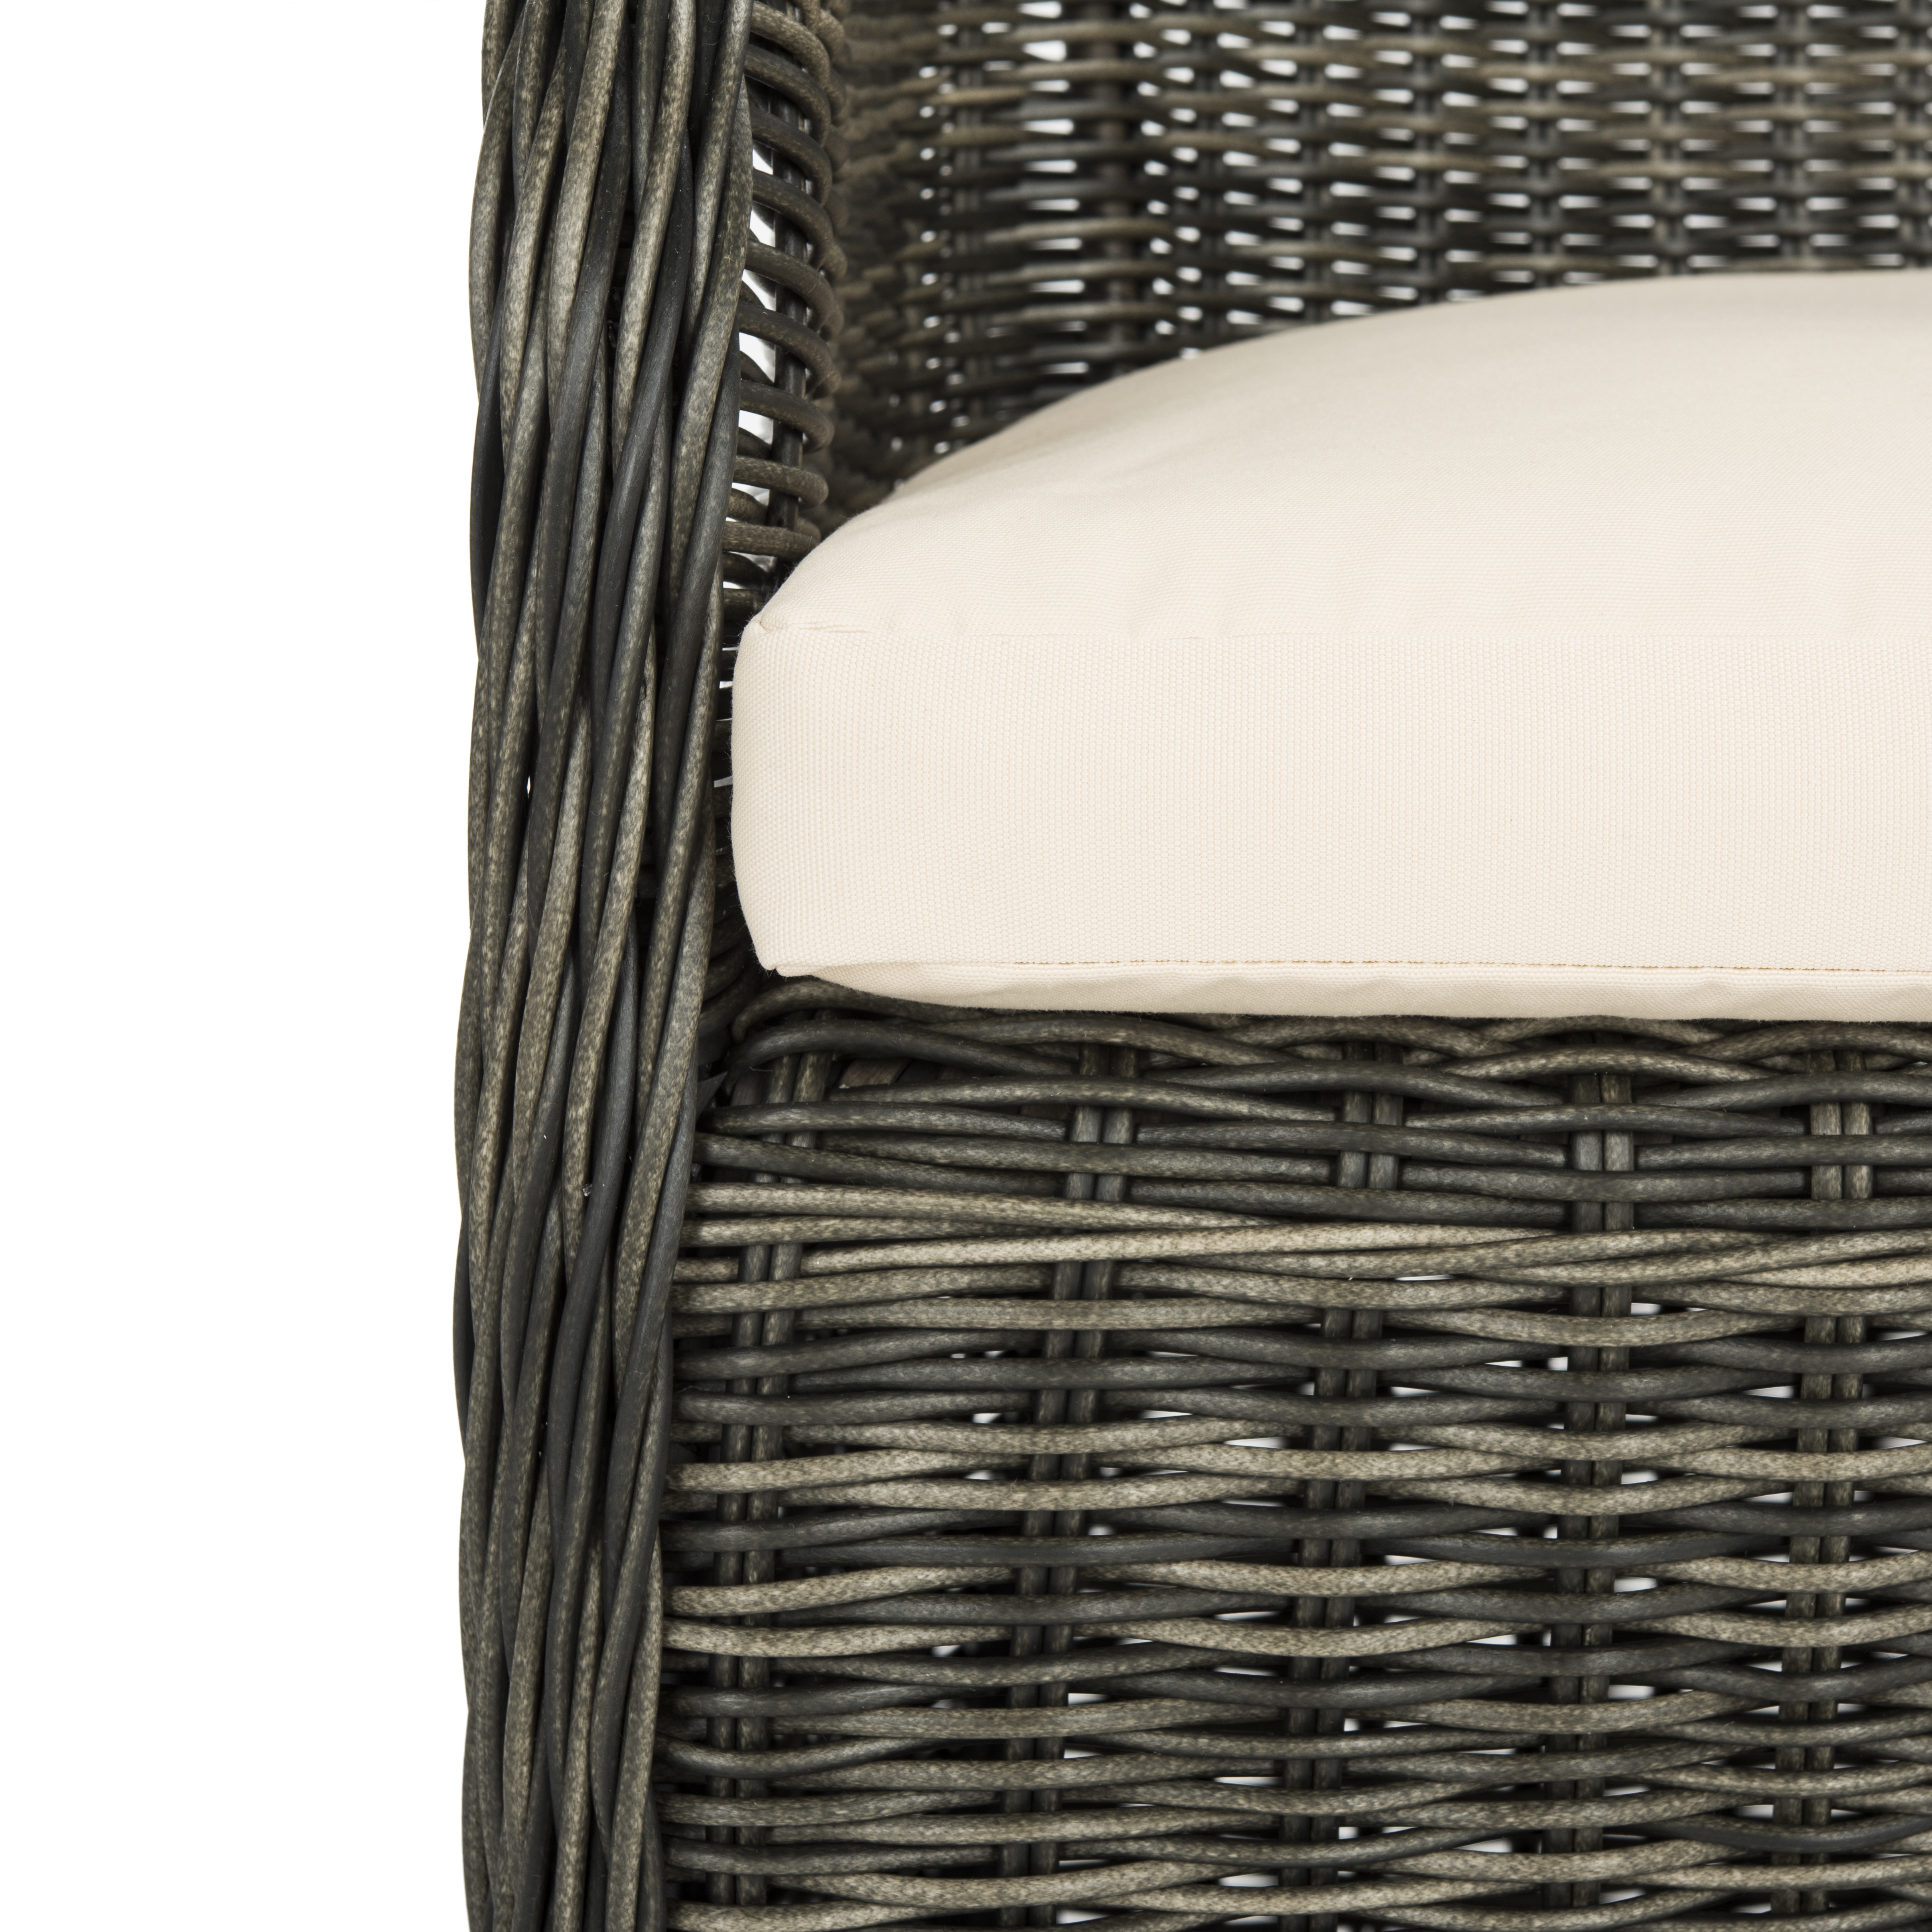 Newton Wicker Arm Chair With Cushion - Grey/Beige - Arlo Home - Image 6